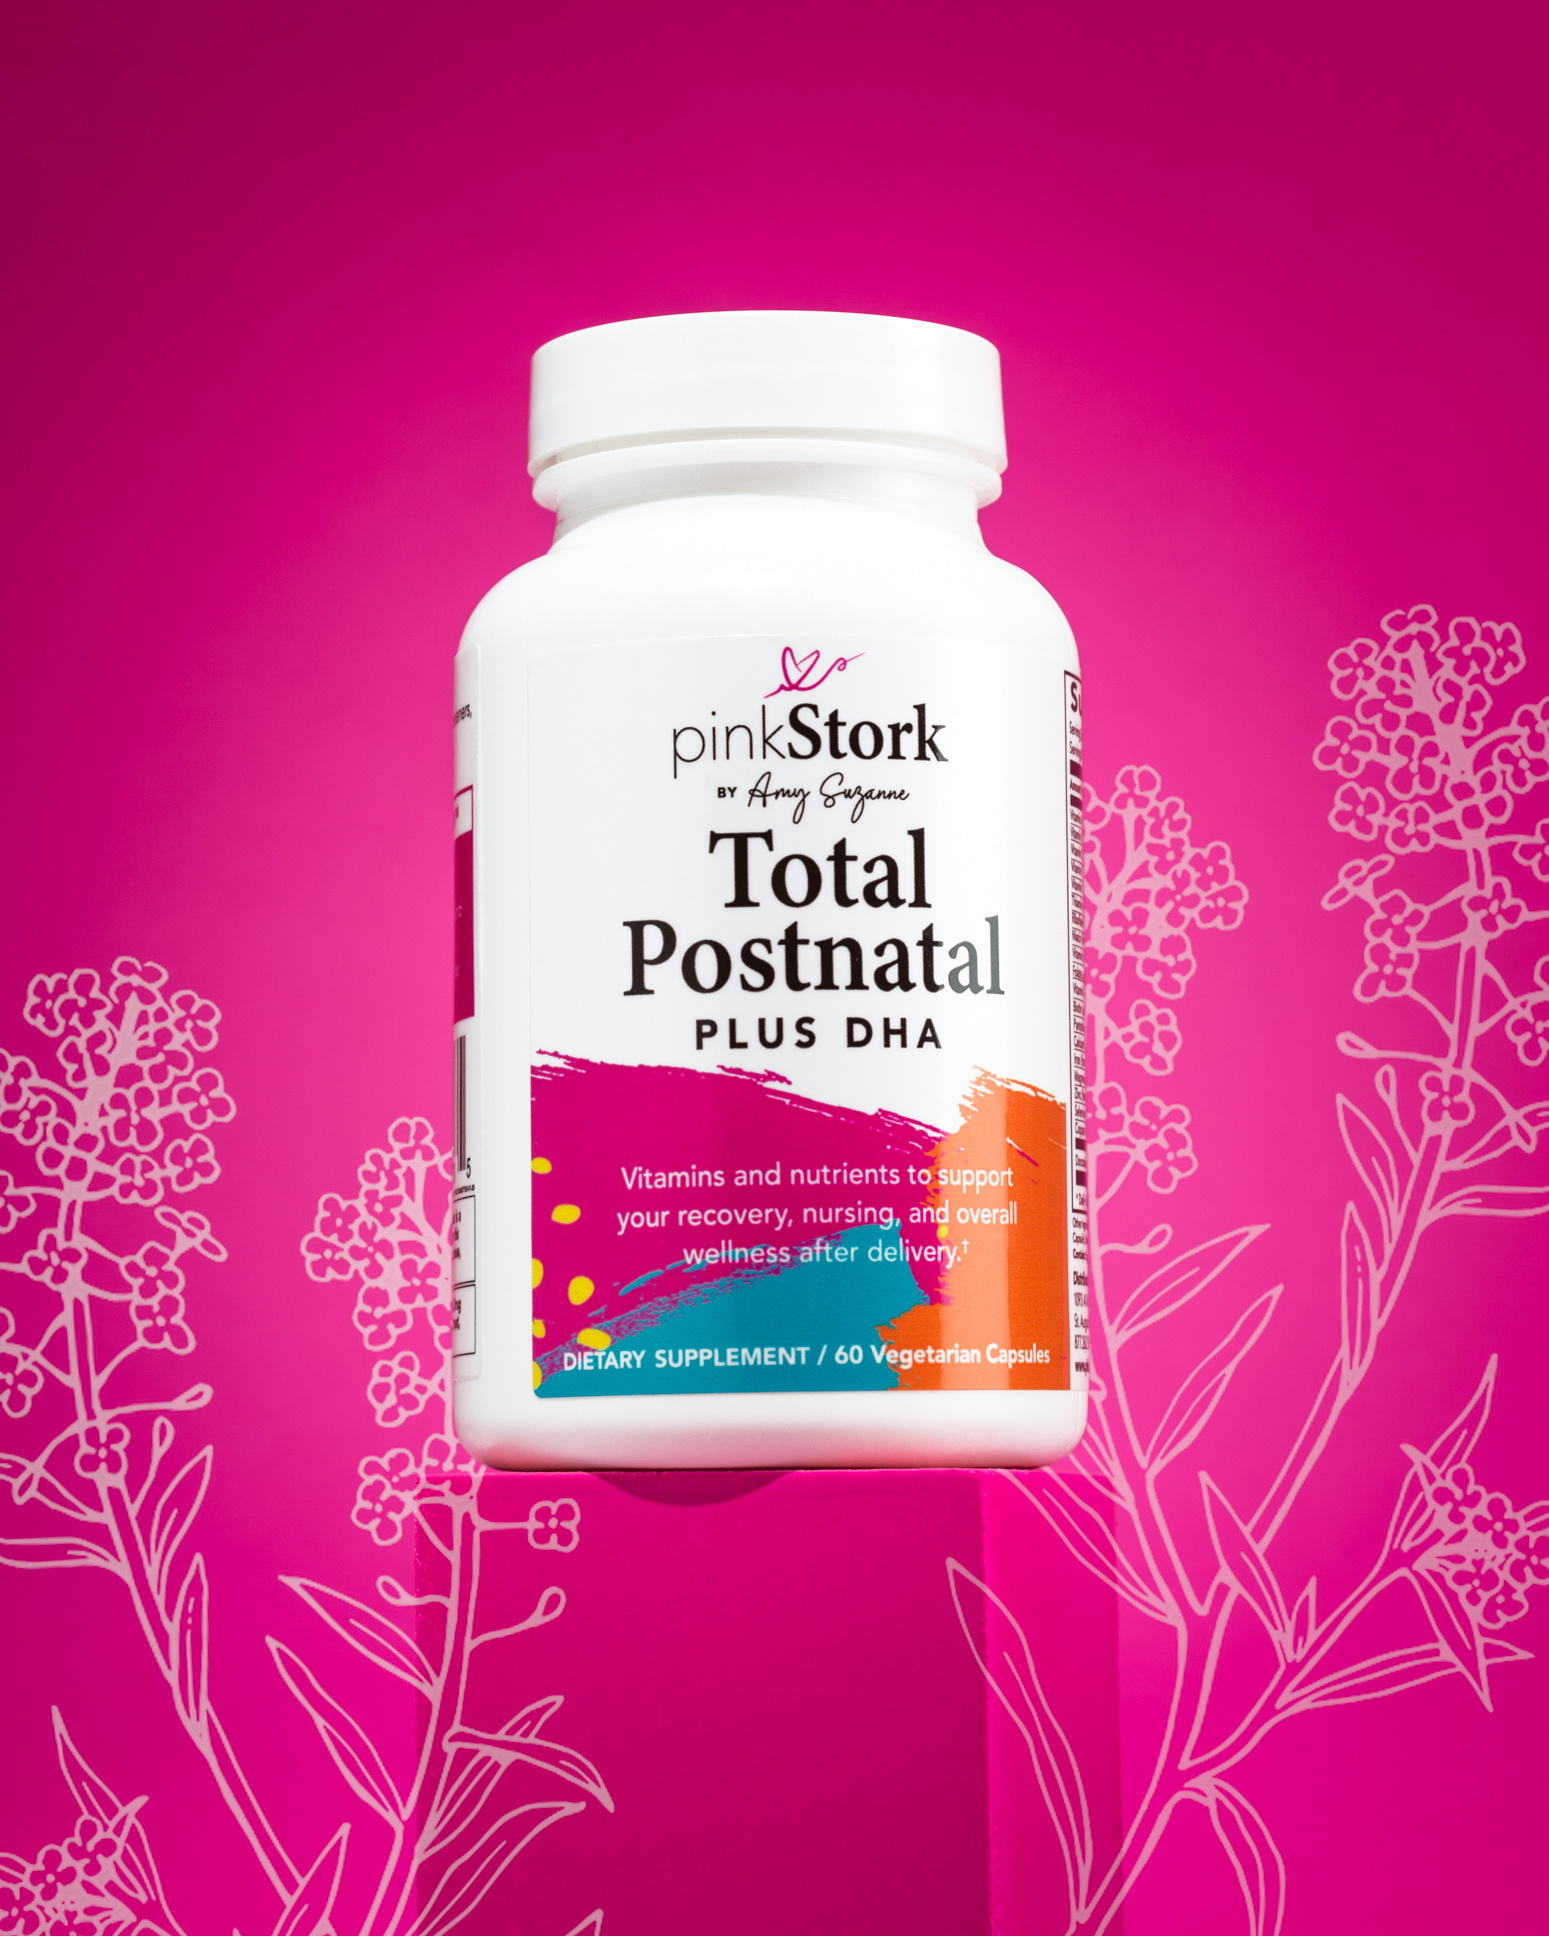 Pink Stork Total Postnatal Product Photo